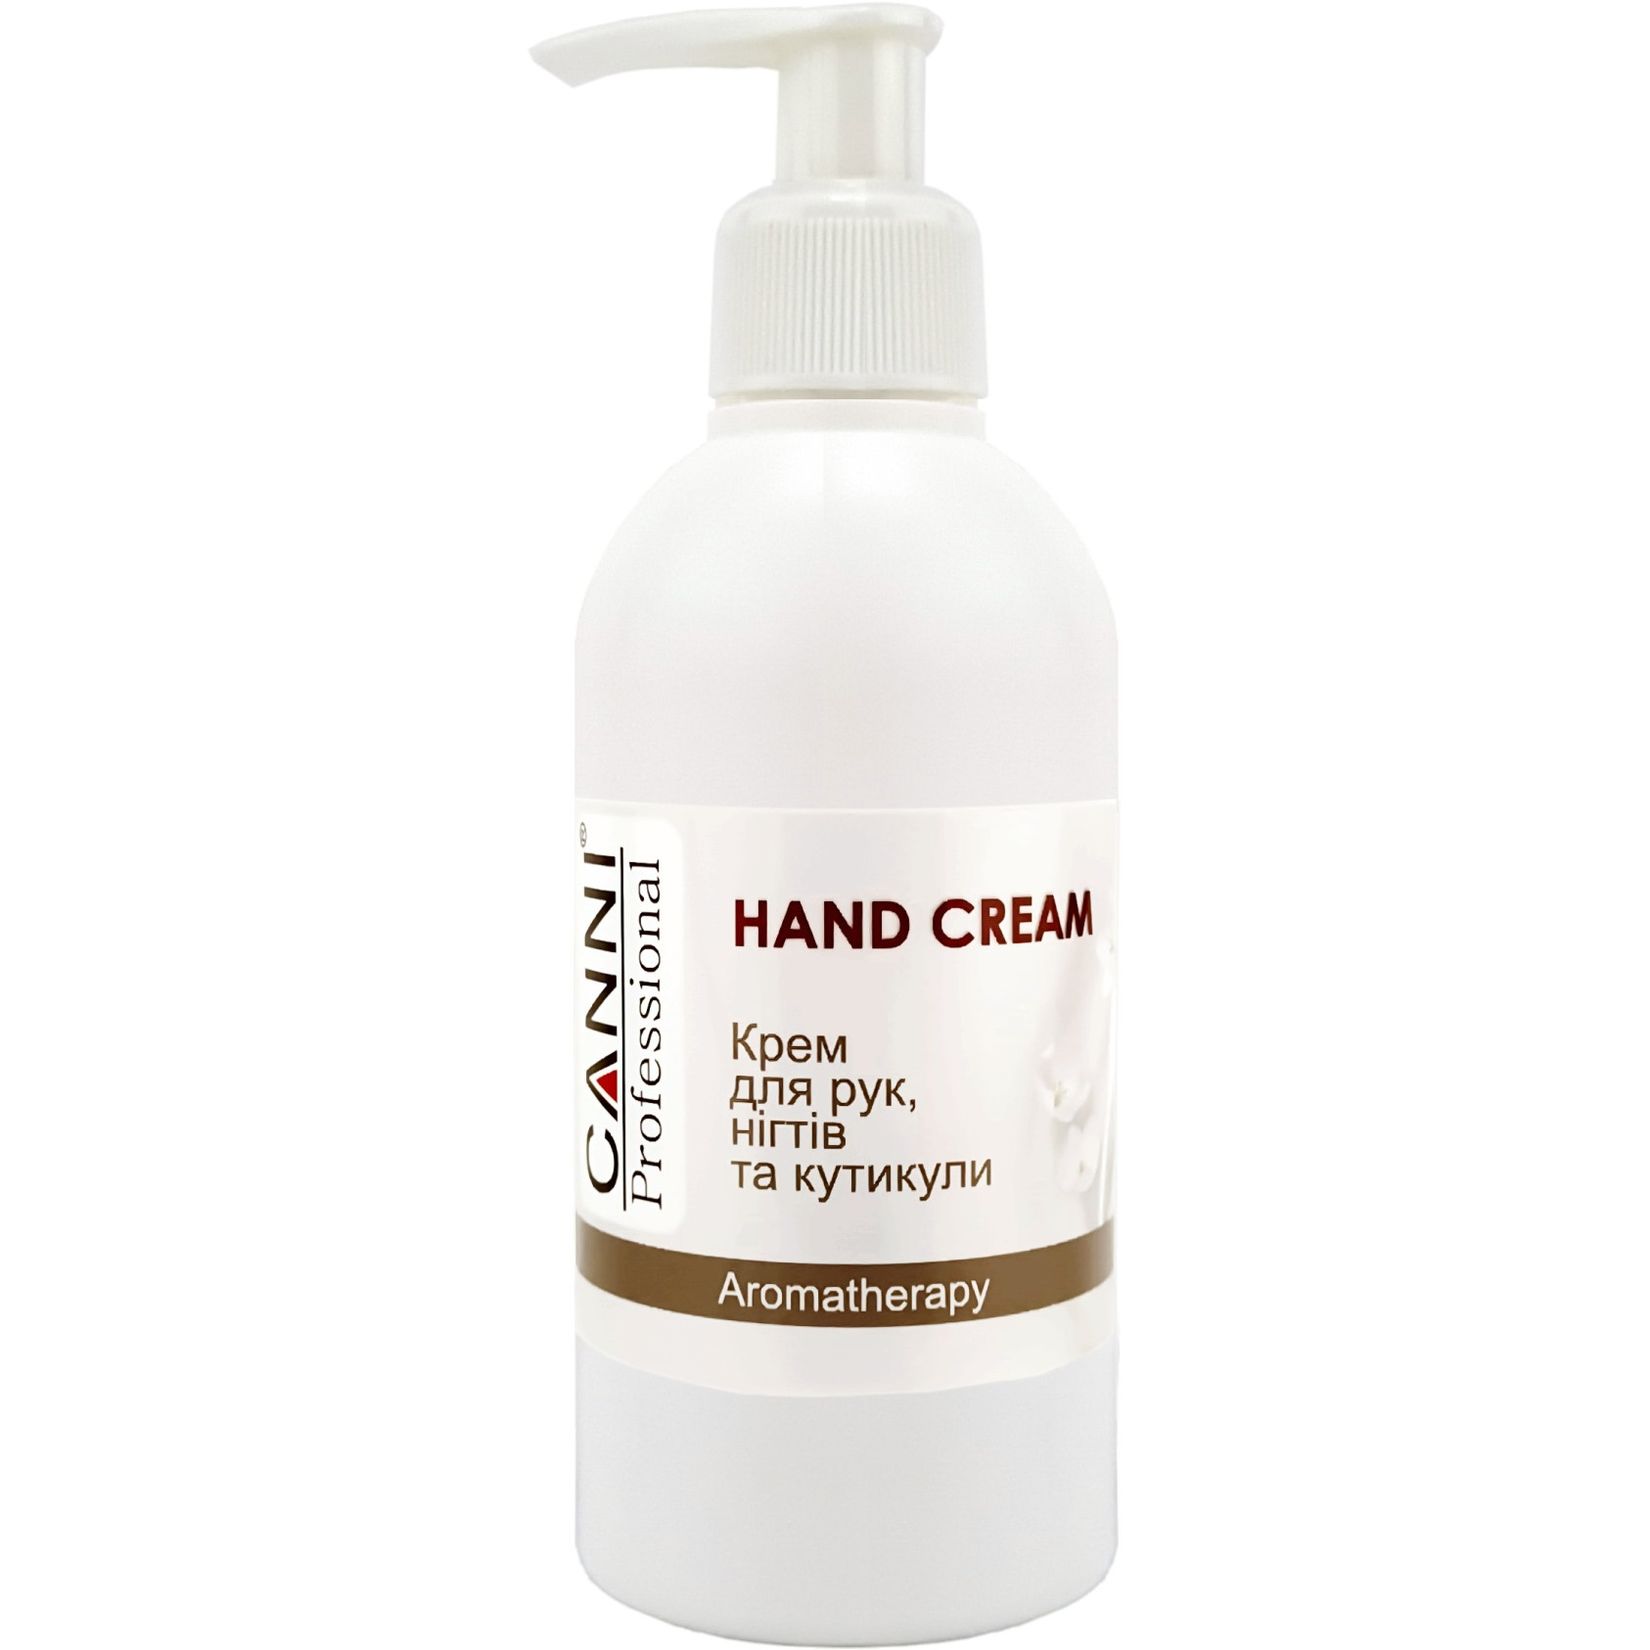 Крем для рук, ногтей и кутикулы Canni Hand Cream Aromatherapy 300 мл - фото 1